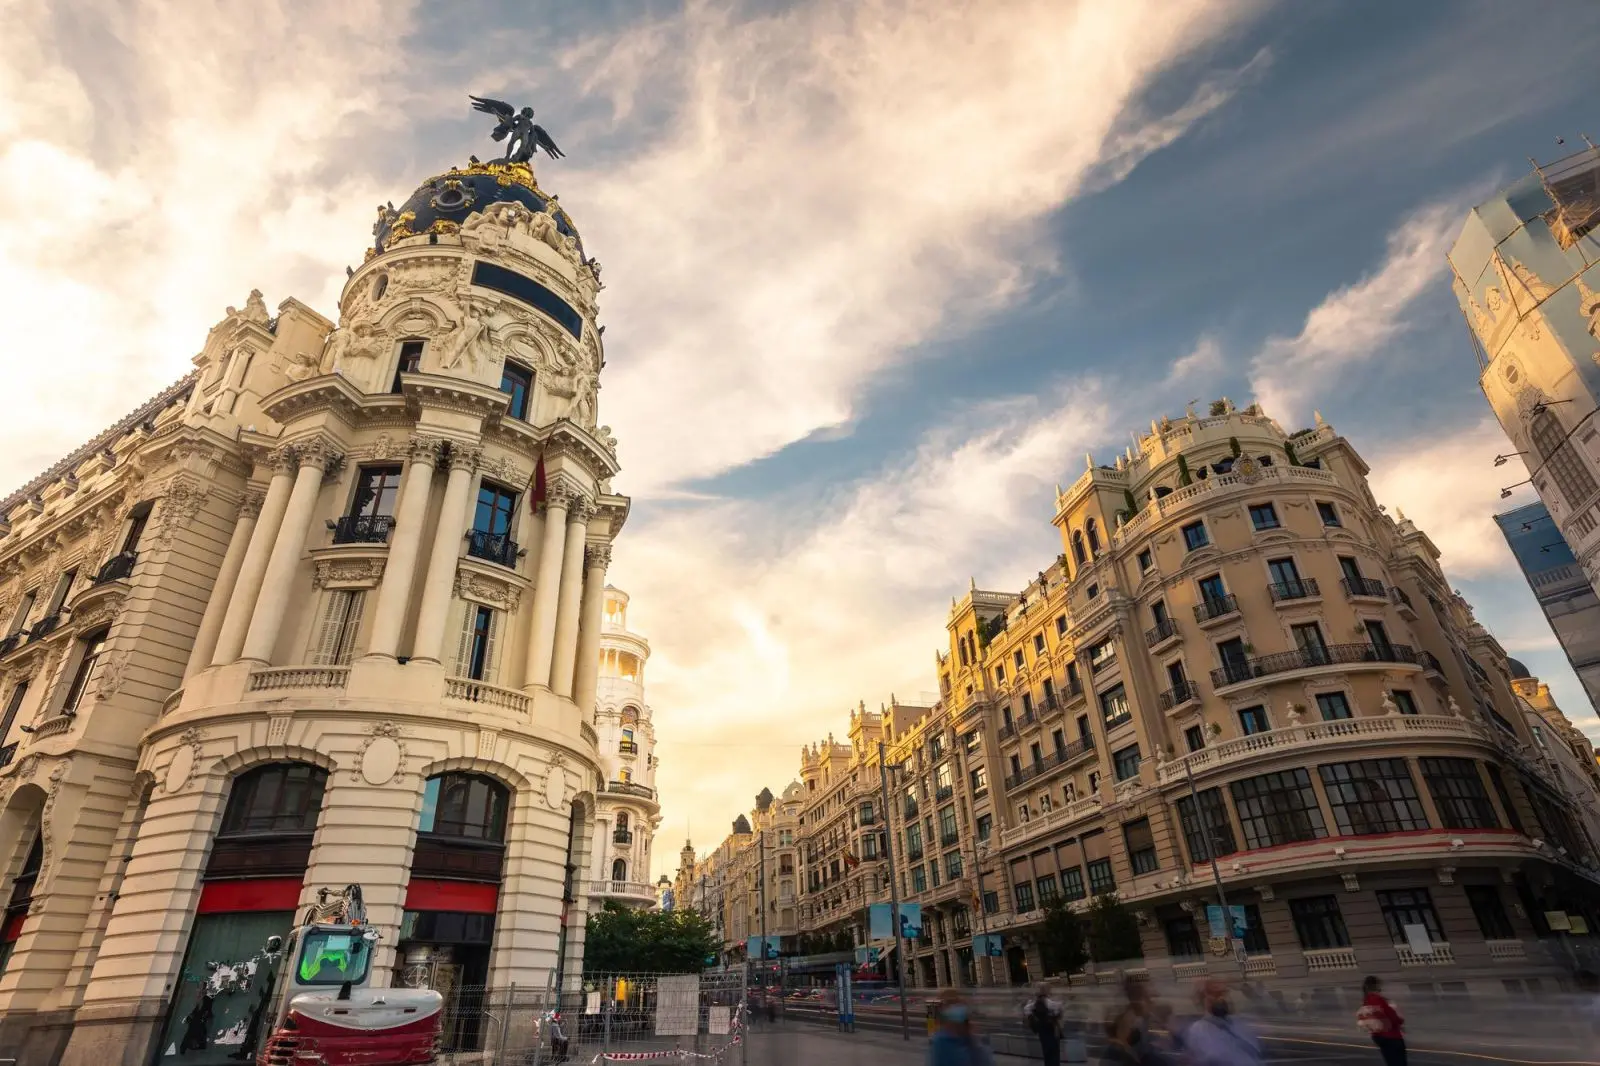 Madrid's most famous street, Gran Via